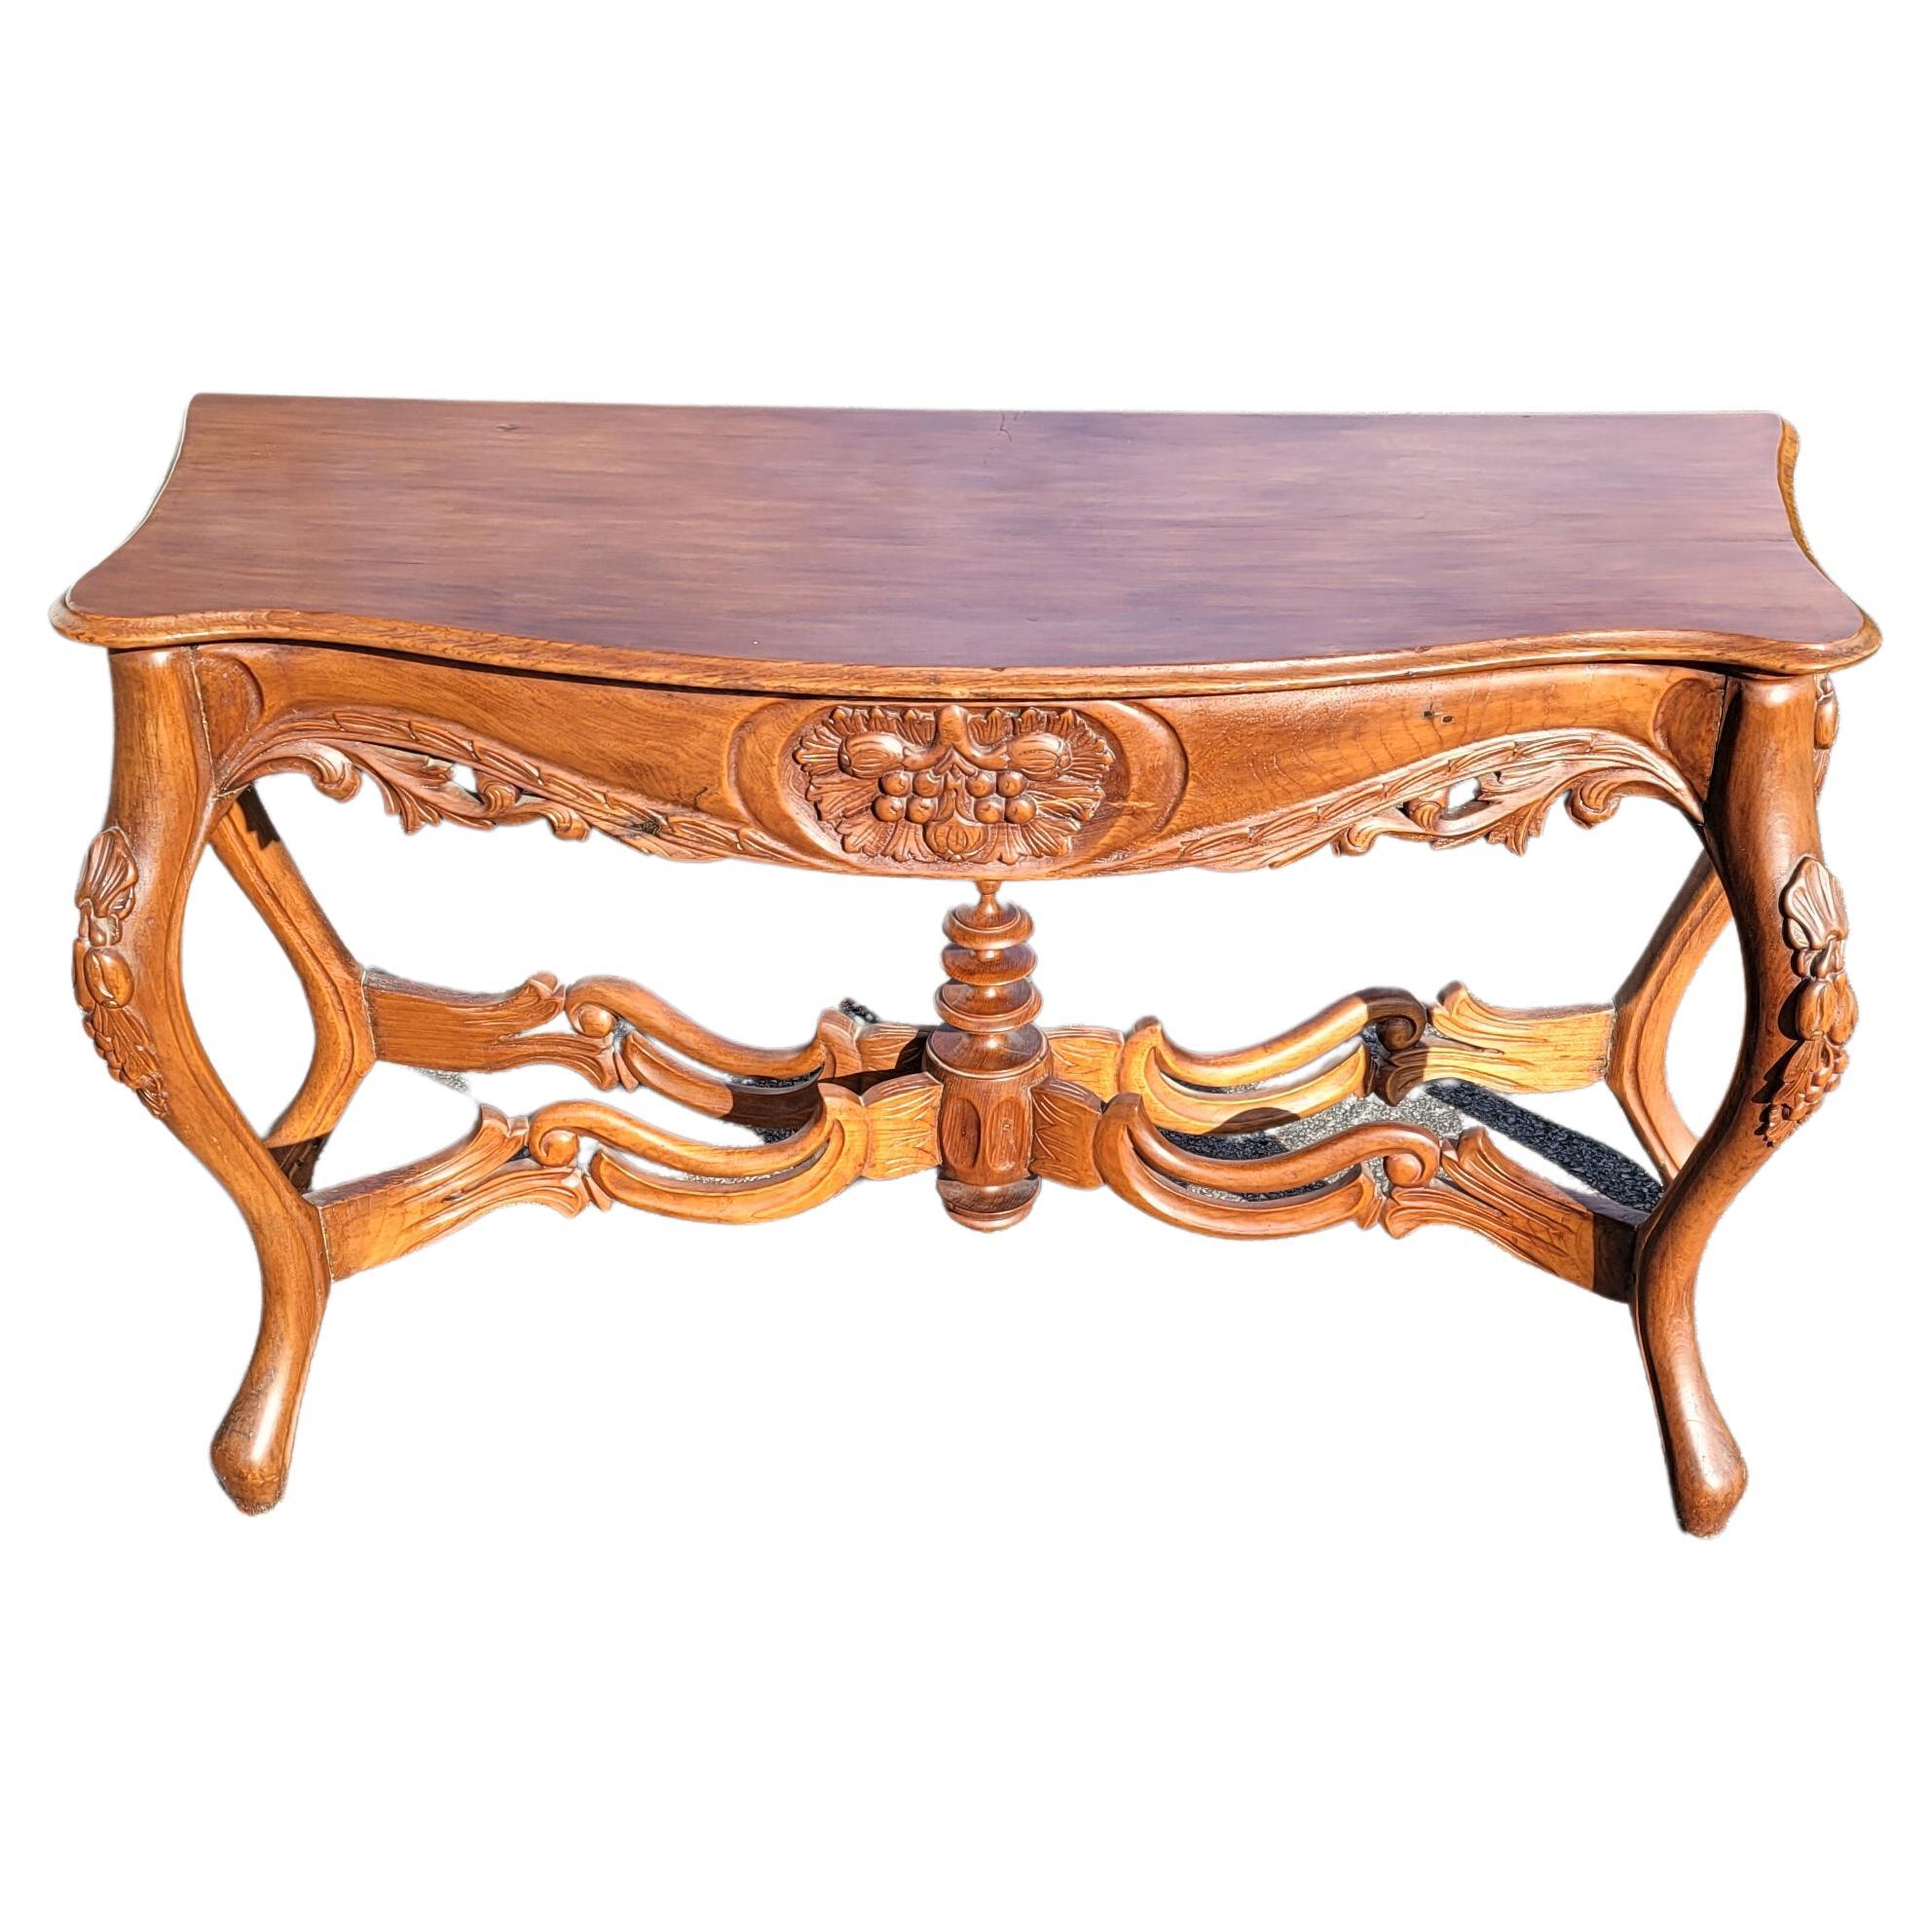 Rococo Revival Rococo Style Carved Mahogany Serpentine Console Table For Sale